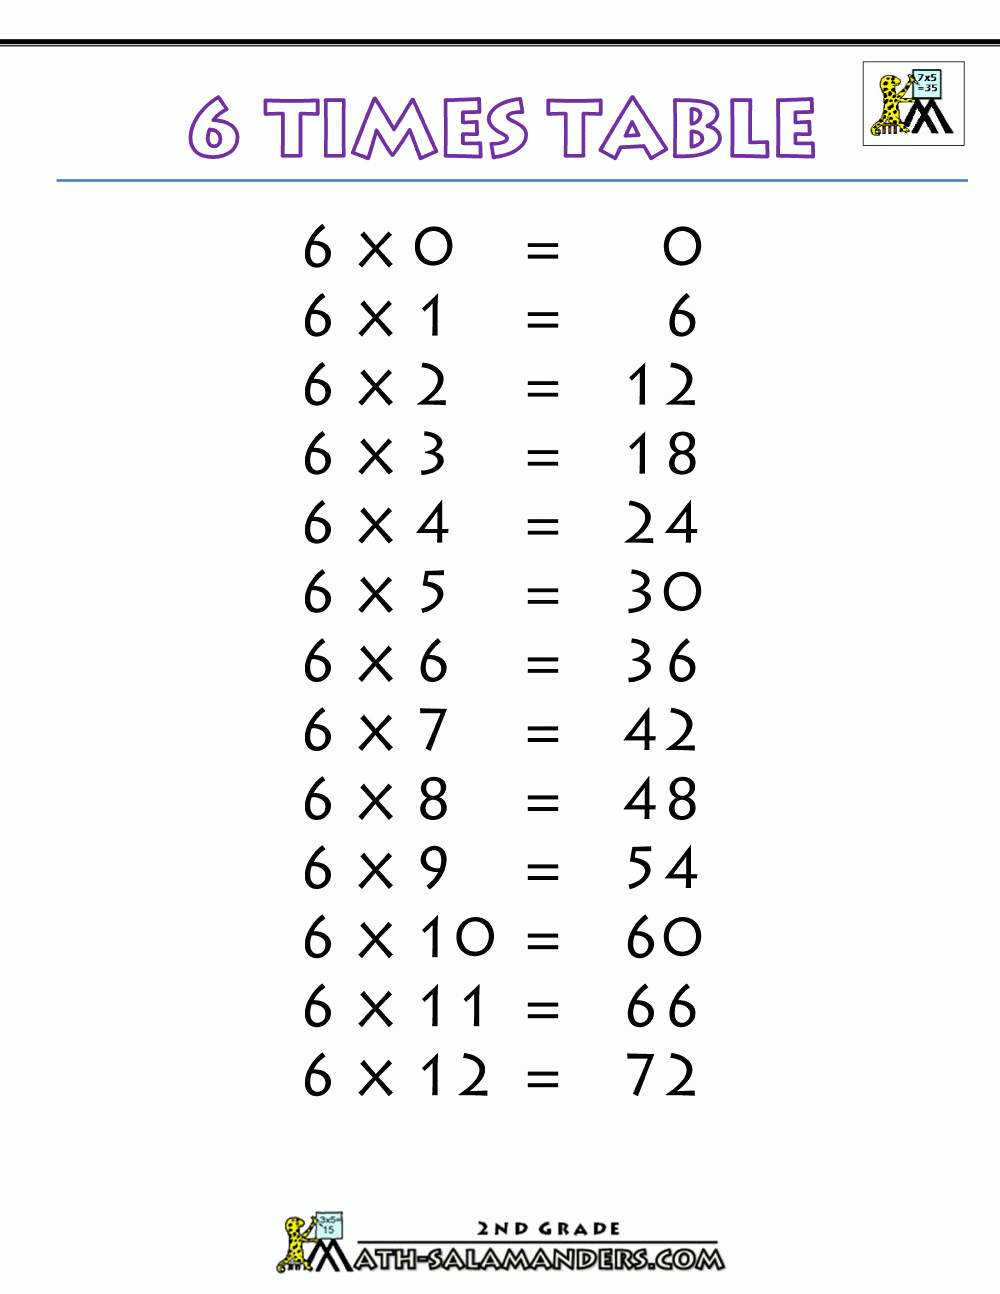 multiplication-worksheets-6-times-tables-printable-multiplication-flash-cards